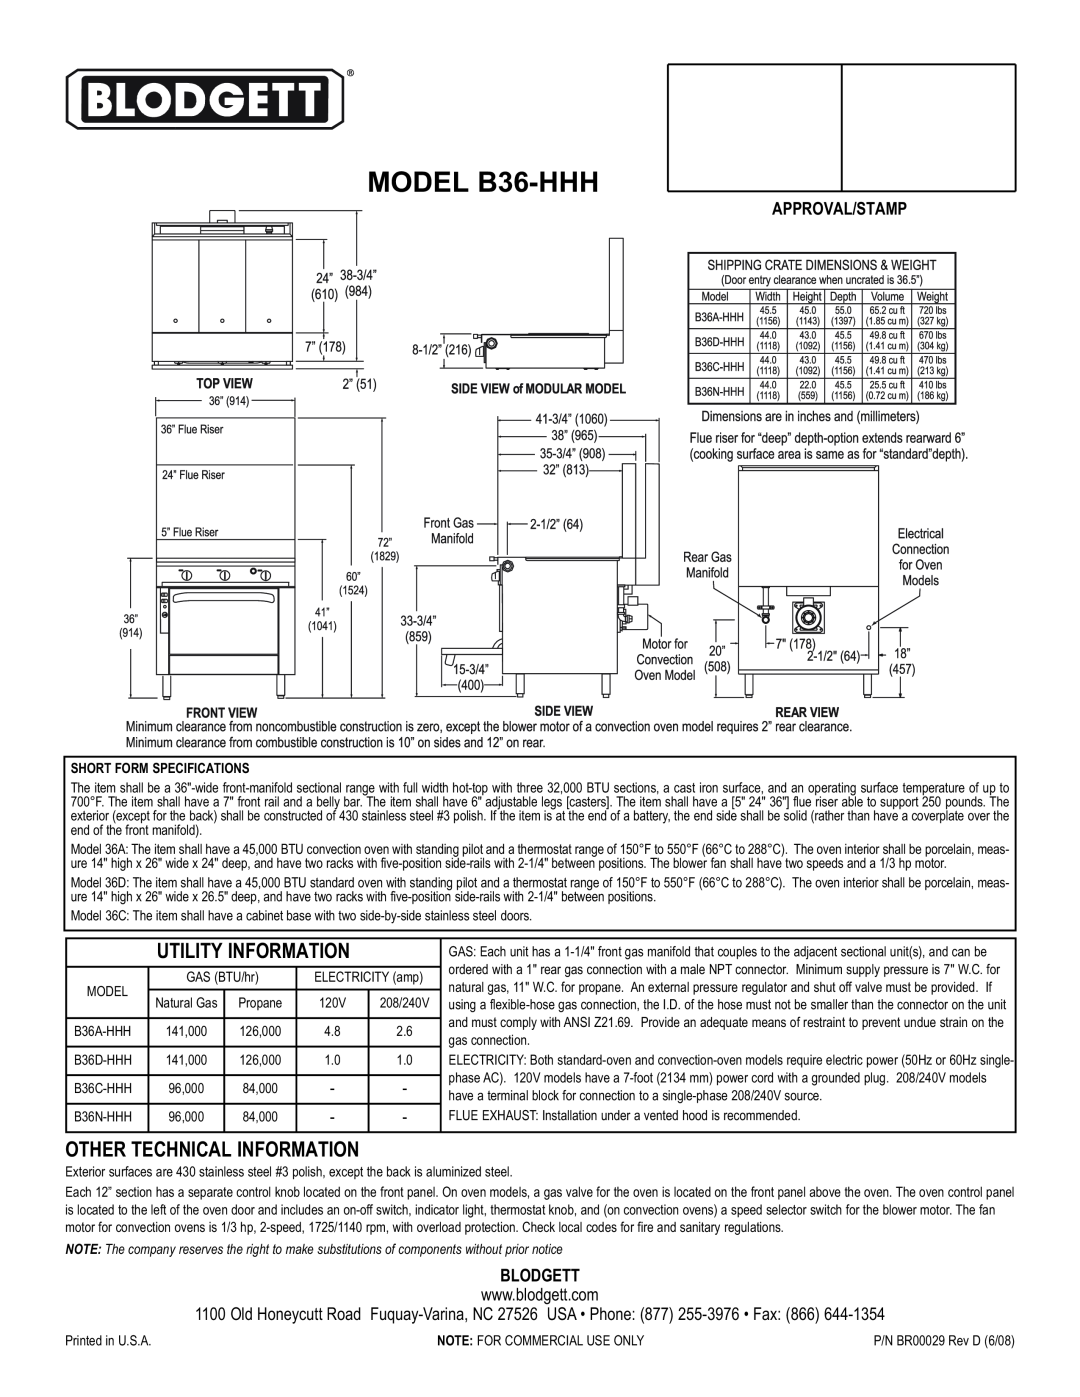 Blodgett warranty MODEL B36-HHH, Utility Information, Other Technical Information, Approval/Stamp, Blodgett 